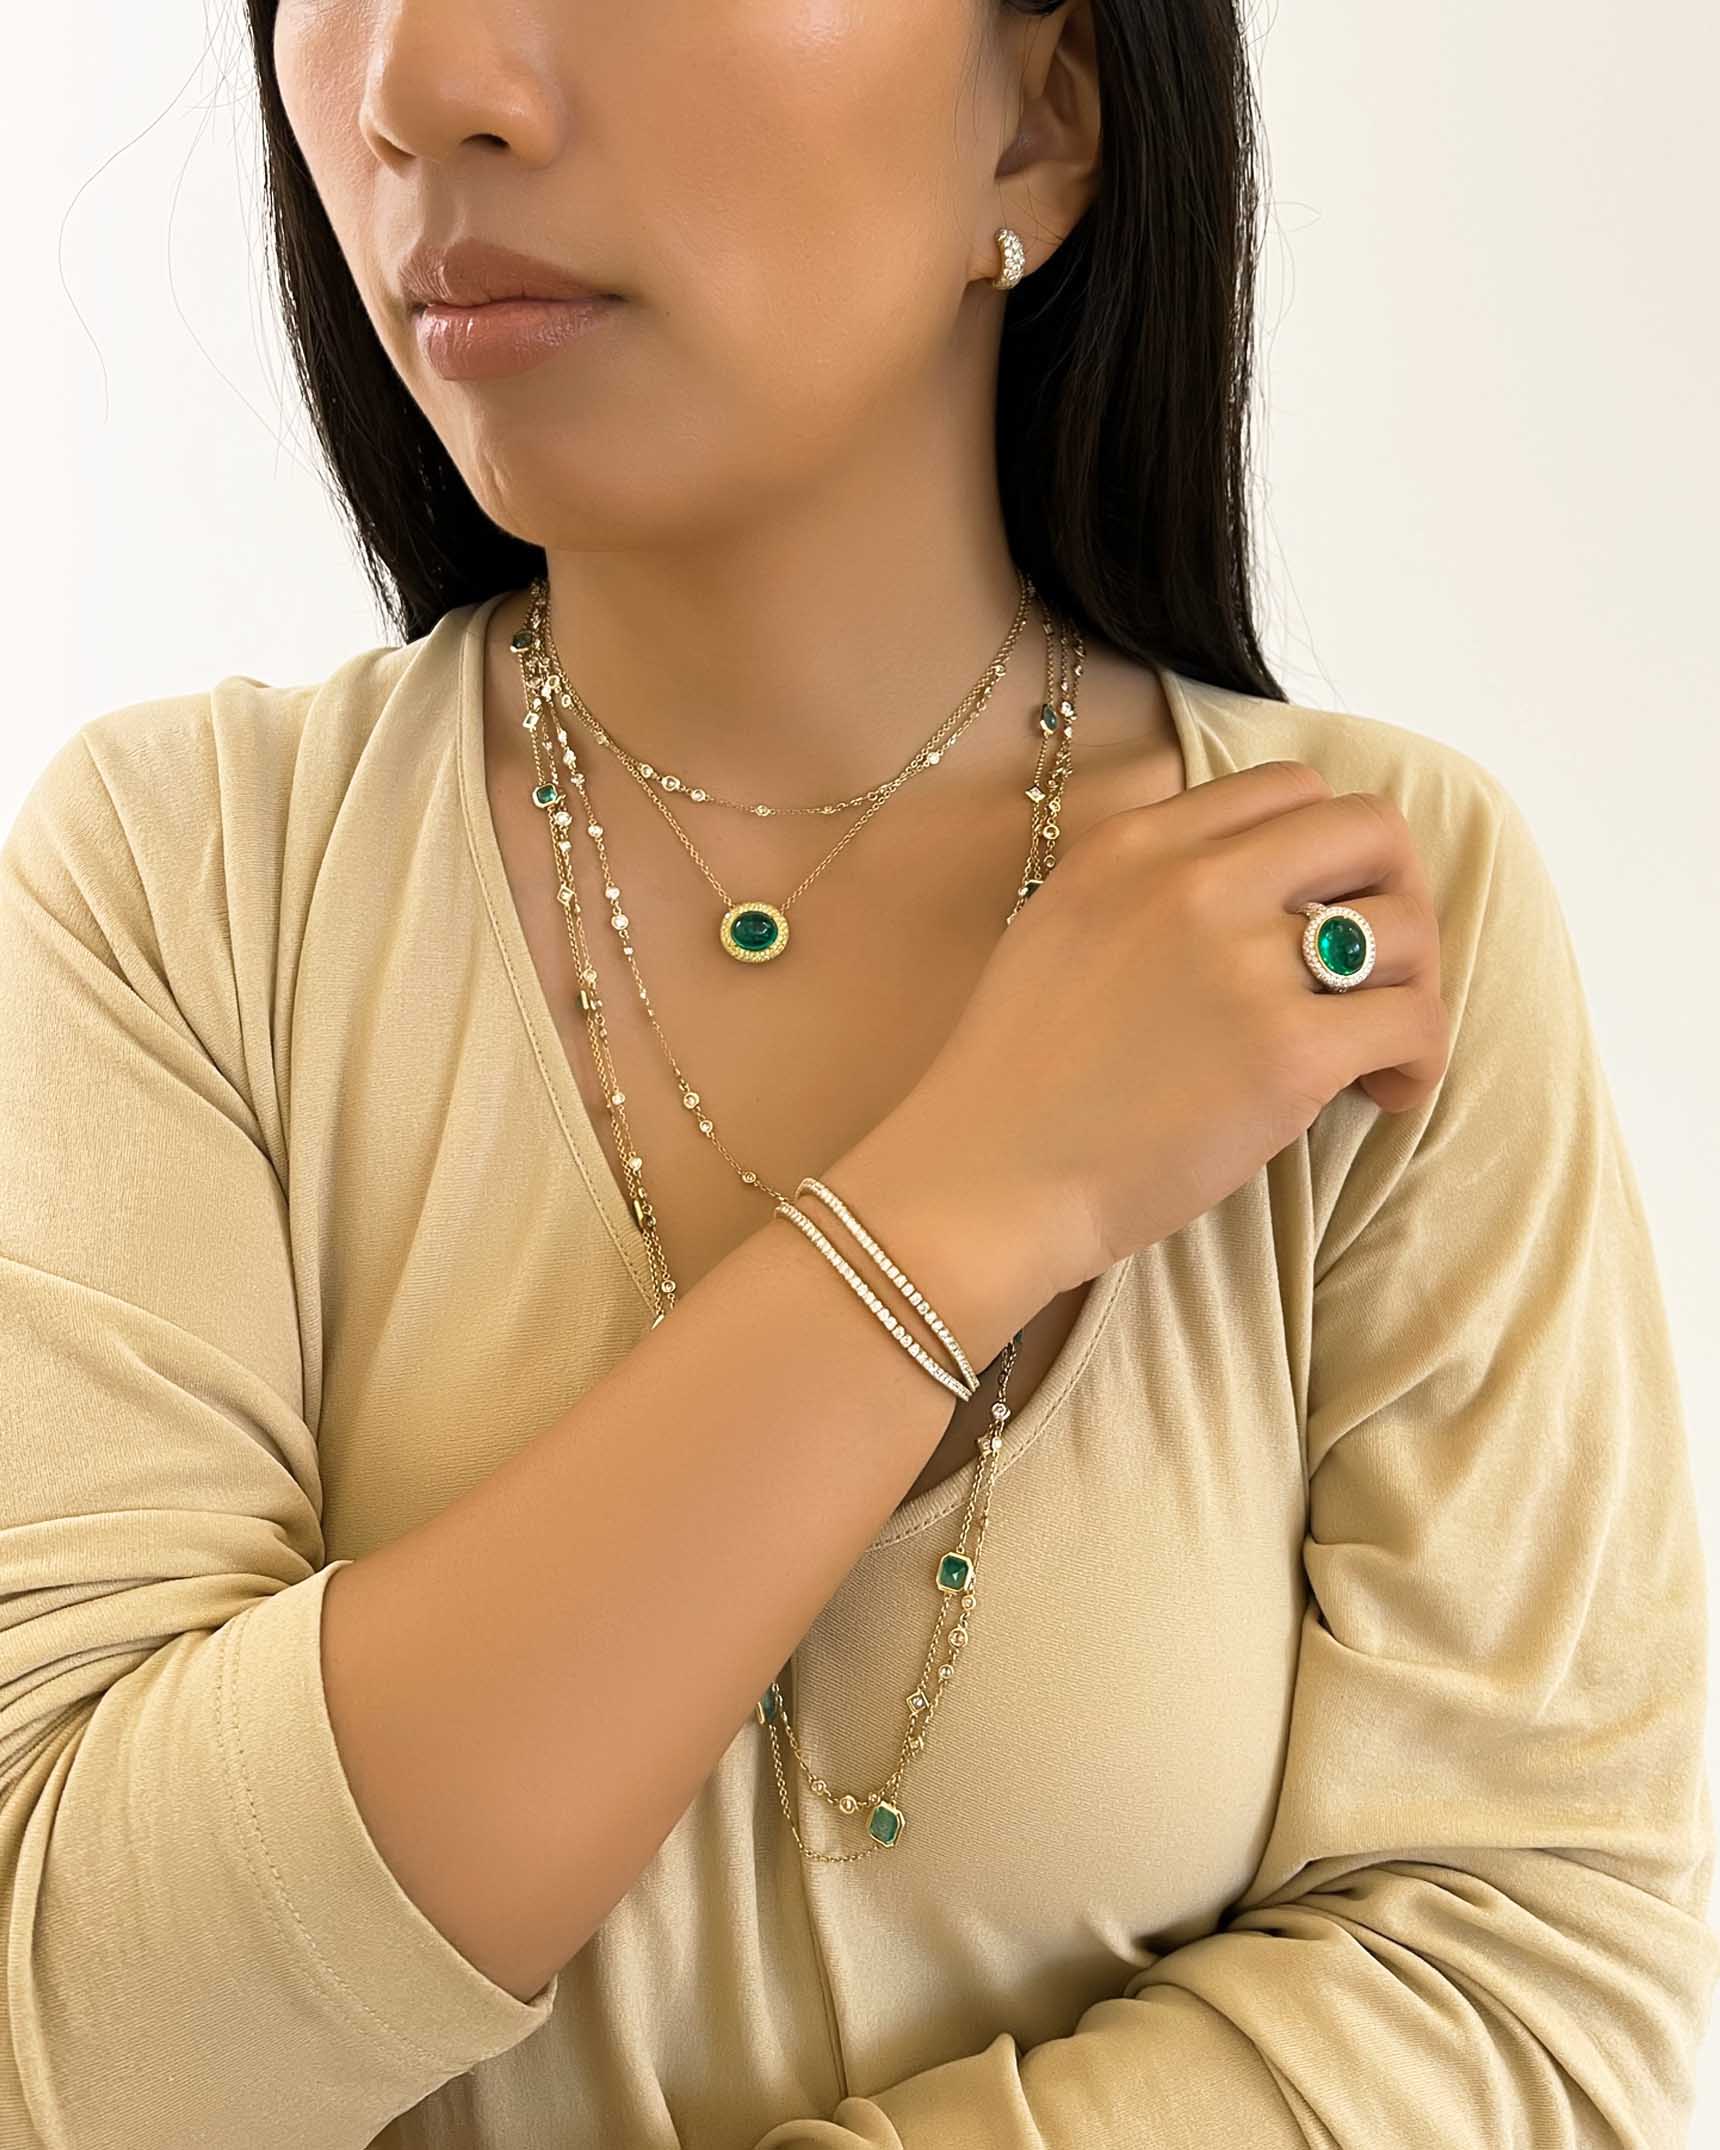 Emerald and Diamond Yellow Gold Earrings_Necklaces_Rings and Bracelets EDF5K06610 – NCOTK01651 – PNC6K01919 – NDOTK05005 – RCDEM01018 – BDUTK01508 – BDUTK01517